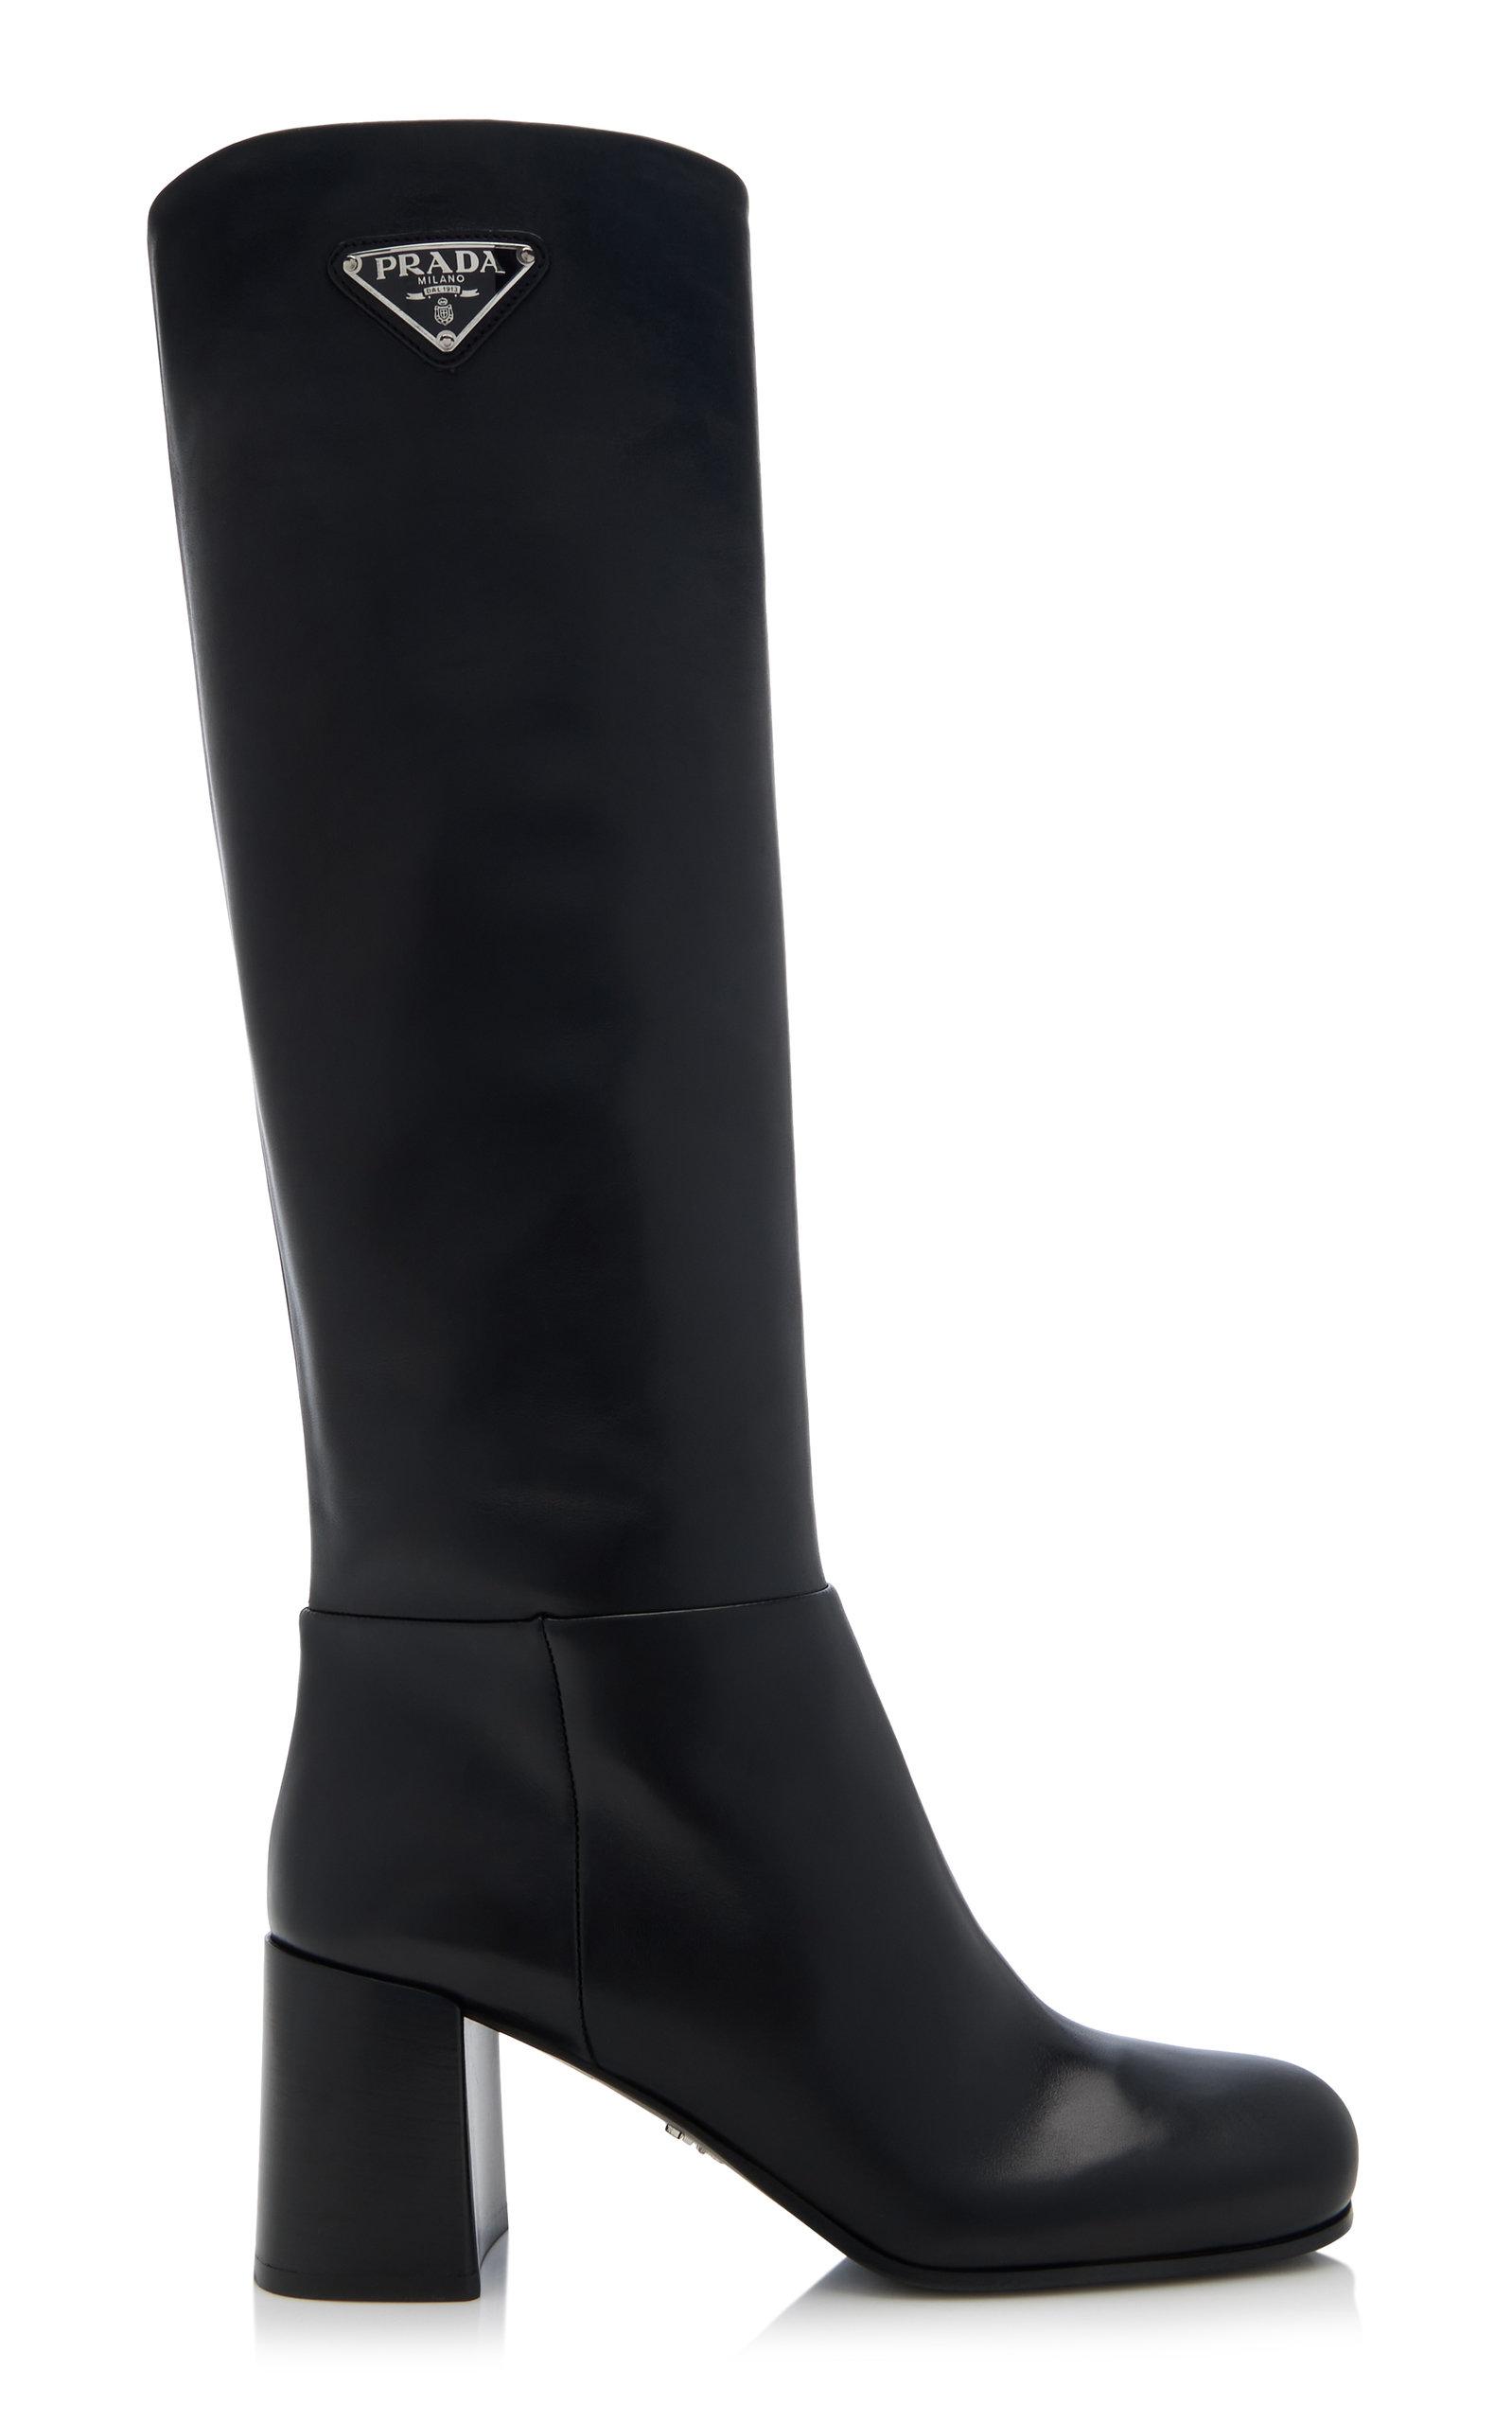 Prada Stivali Leather Knee Boots in Black | Lyst